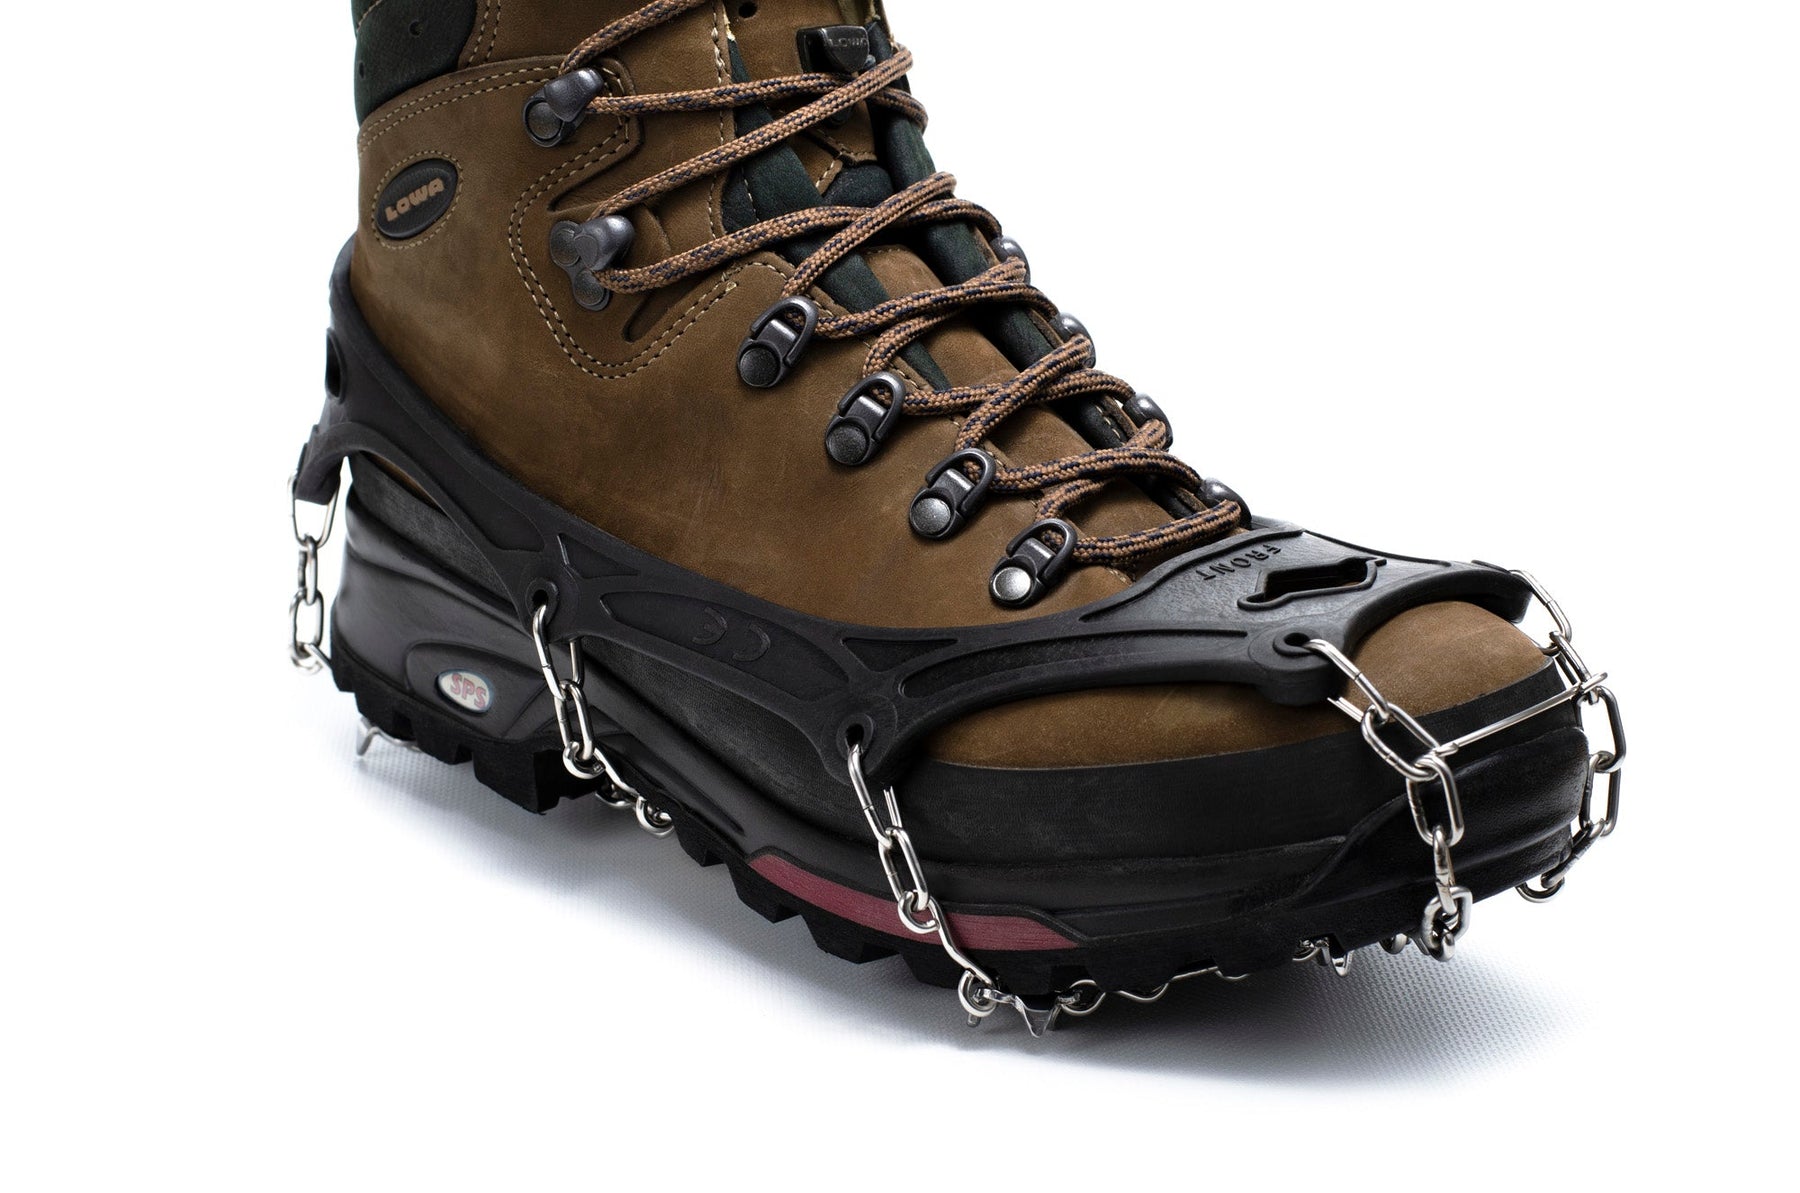 FreeSteps6 - Winter Footwear Traction | Hillsound Equipment – [USA 